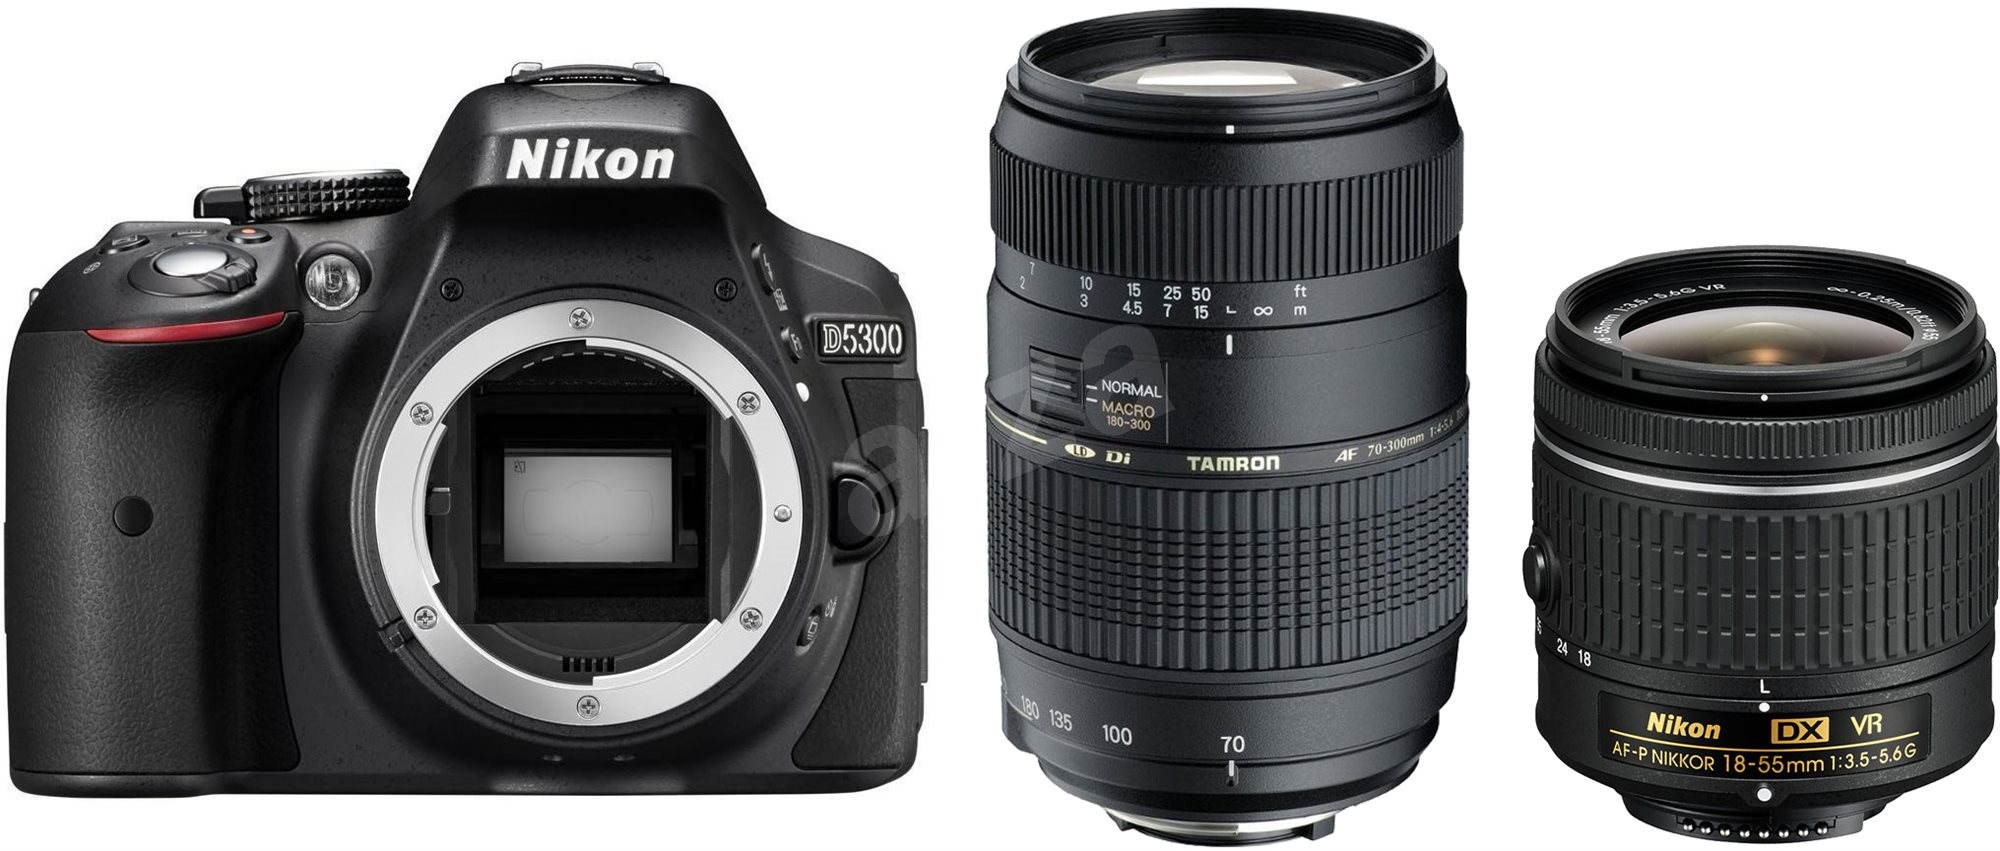 Nikon D5300 Software